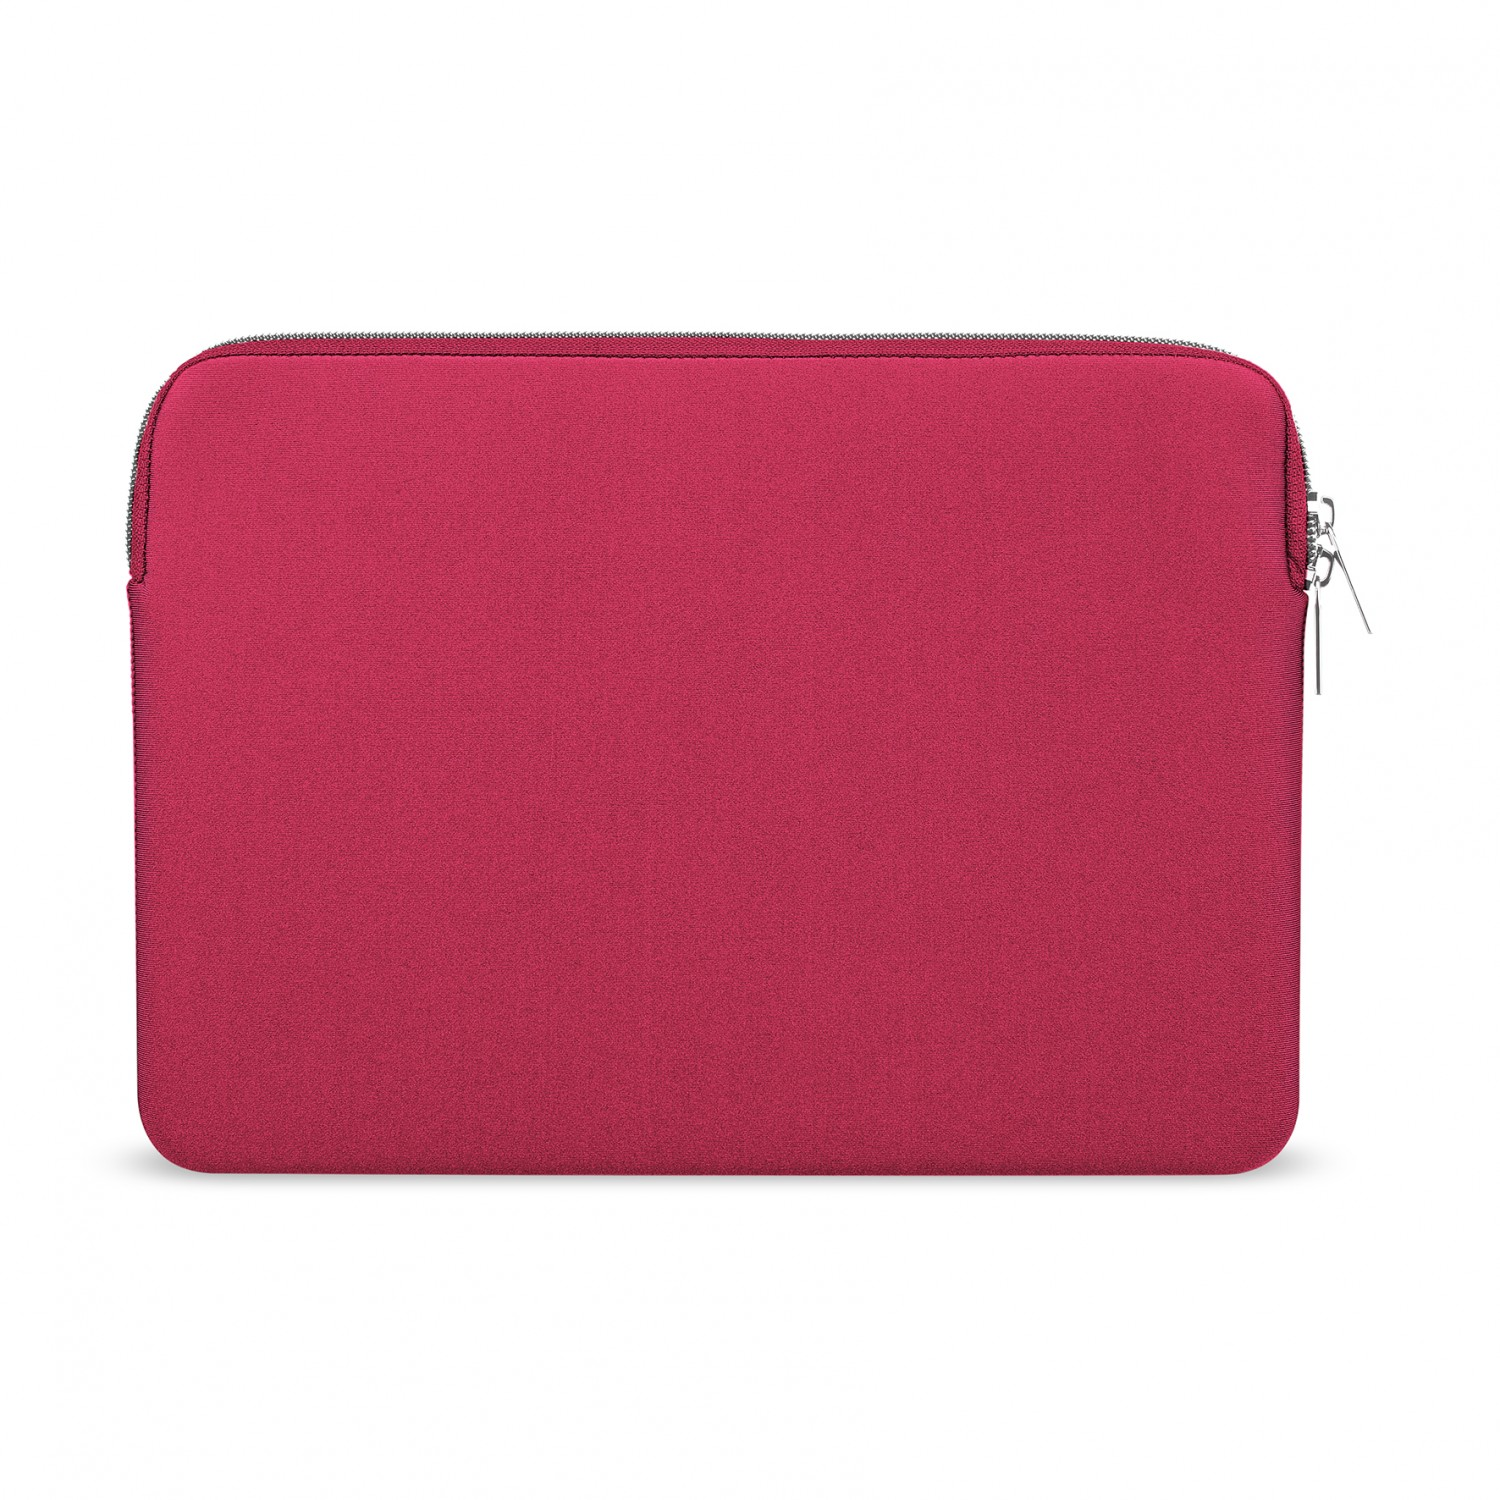 ARTWIZZ Neoprene Notebook für Sleeve Rubinrot Apple Sleeve Tasche Neopren